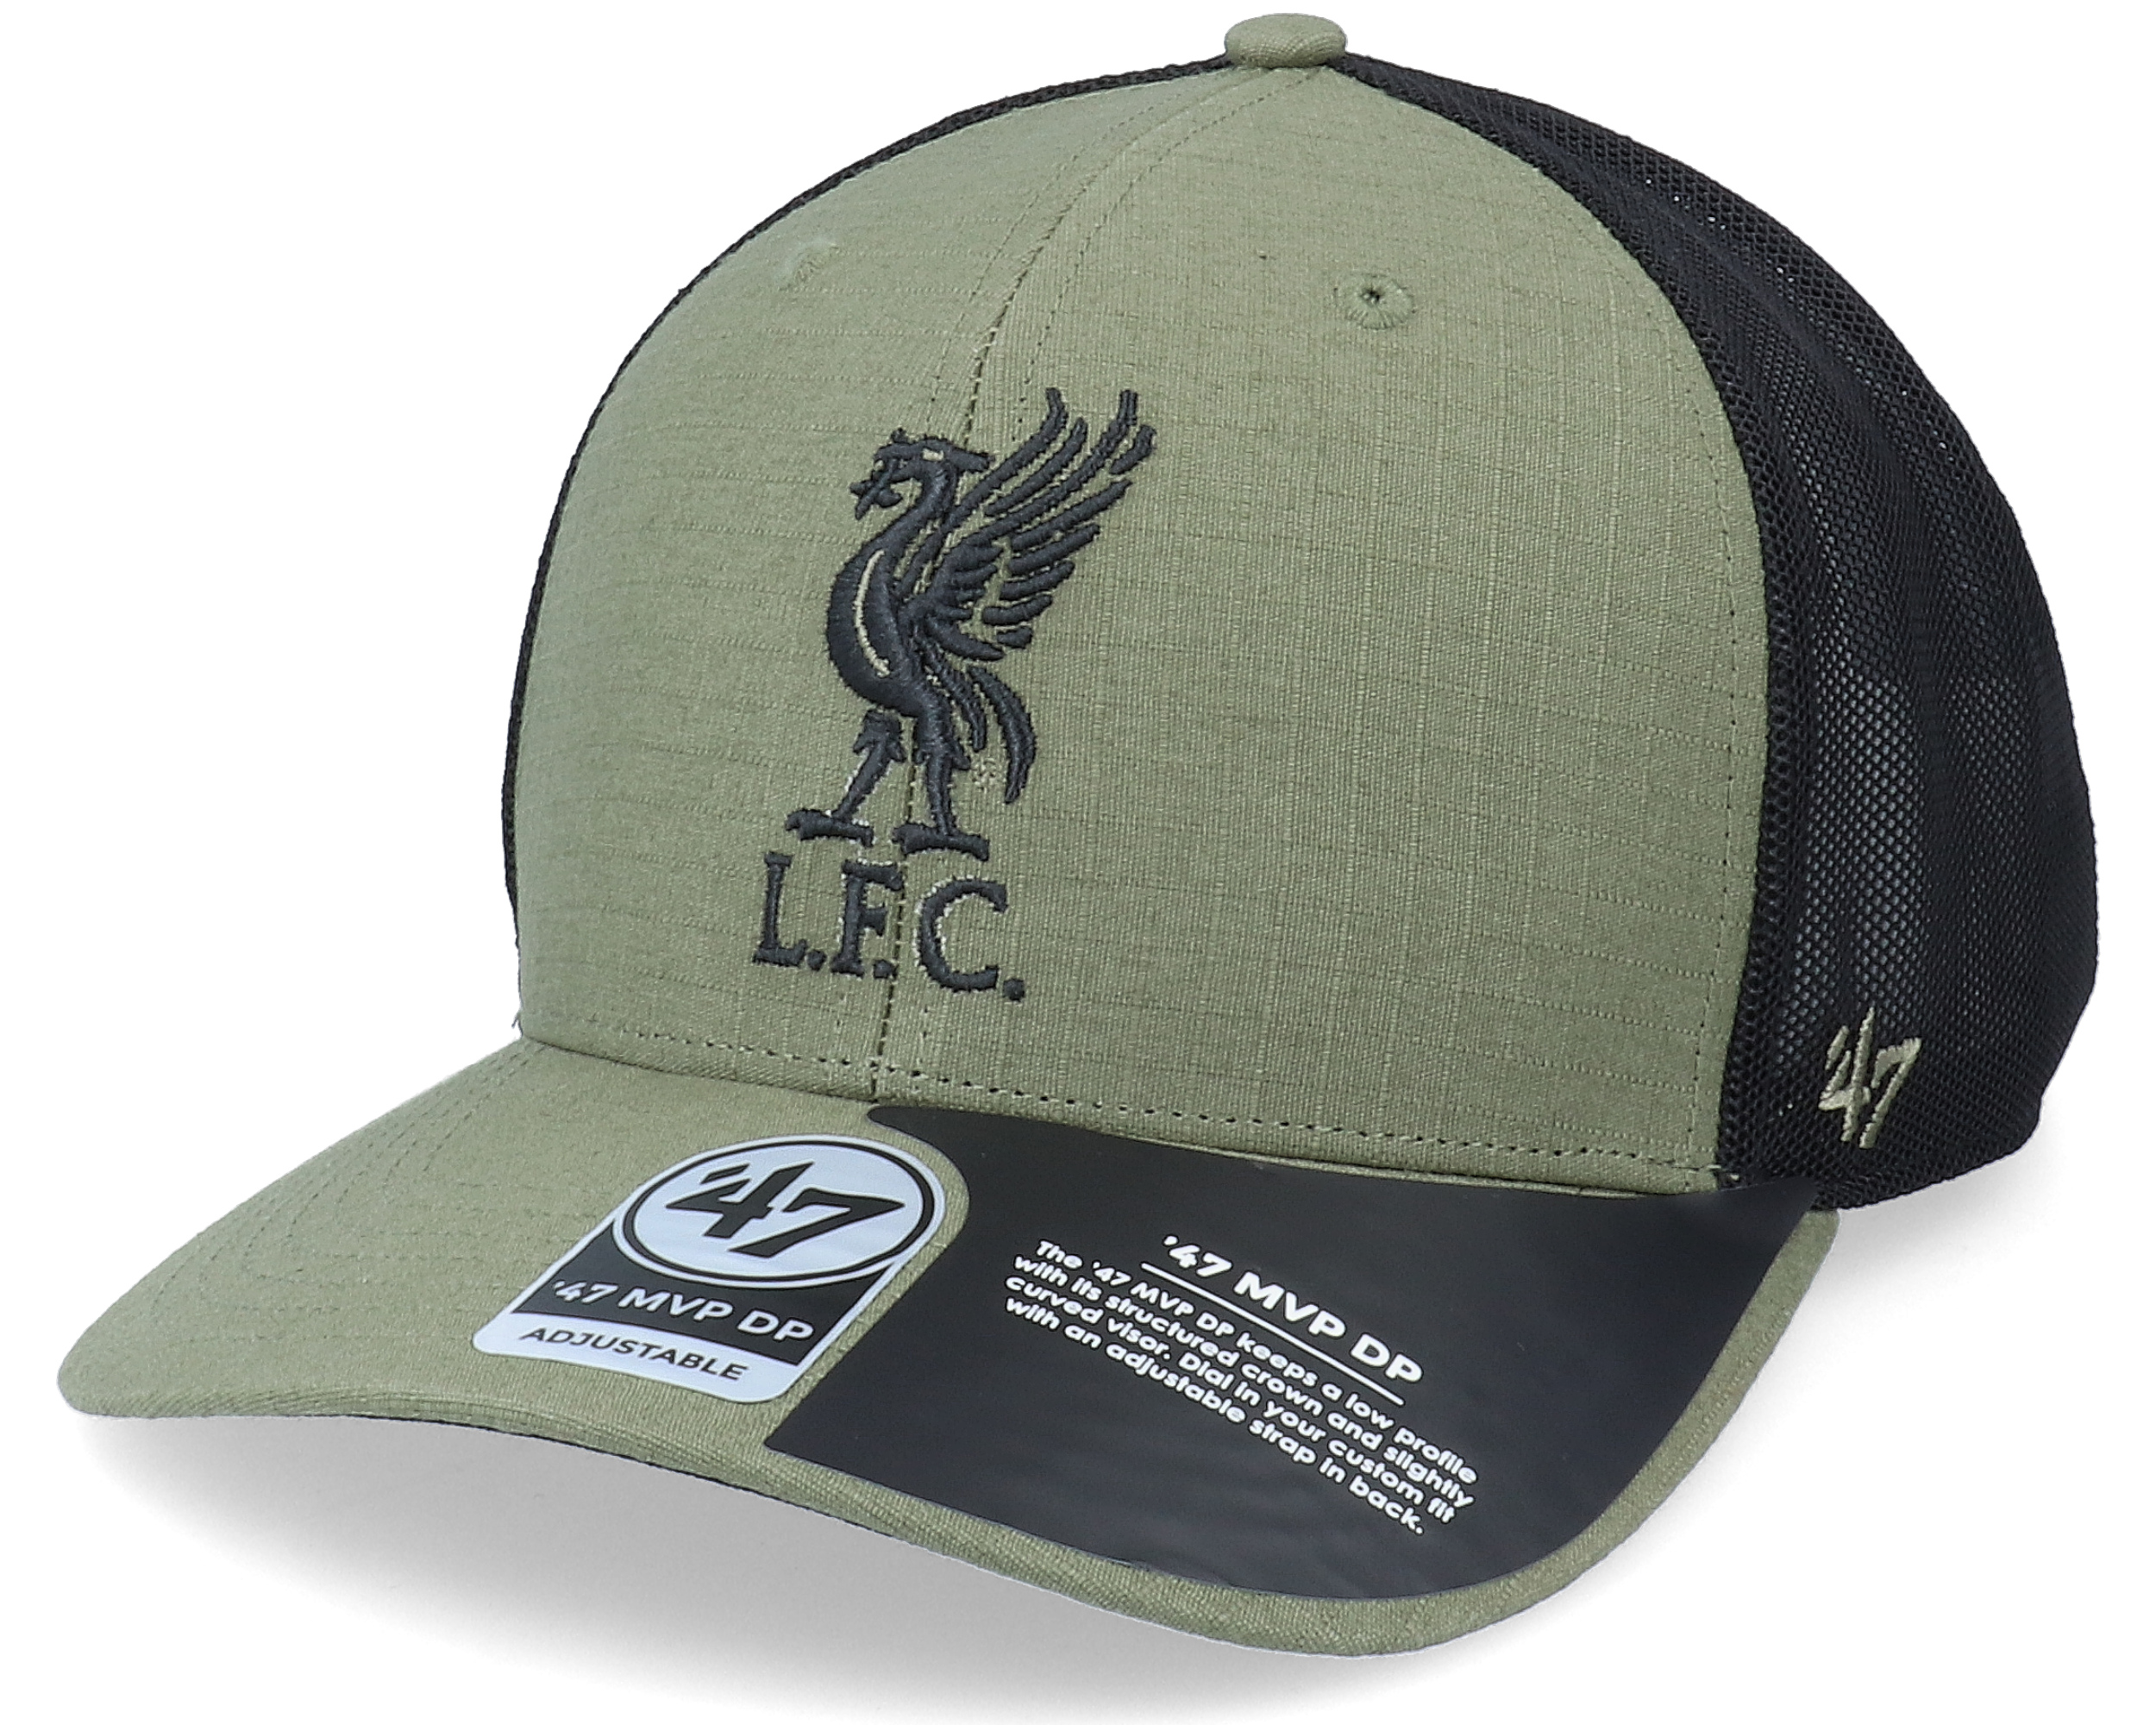 Liverpool FC Grid Lock Mesh Mvp Dp Canopy/Black Trucker - 47 Brand caps ...